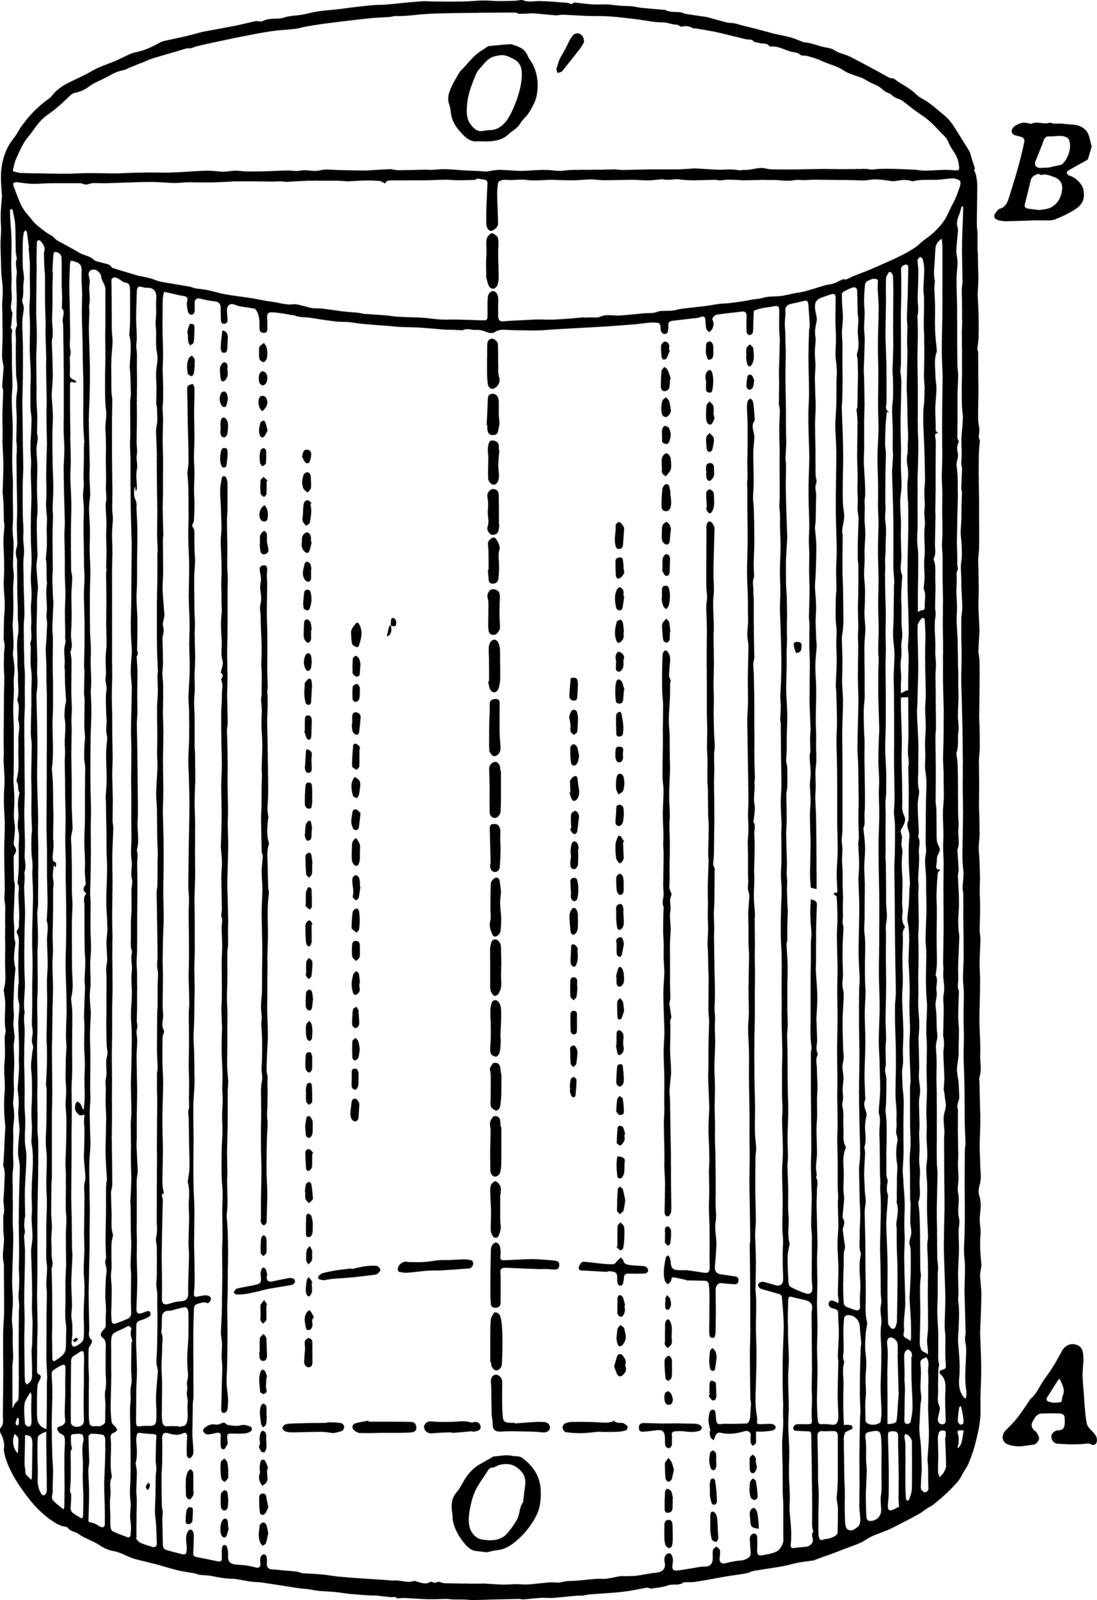 Right Circular Cylinder vintage illustration.  by Morphart